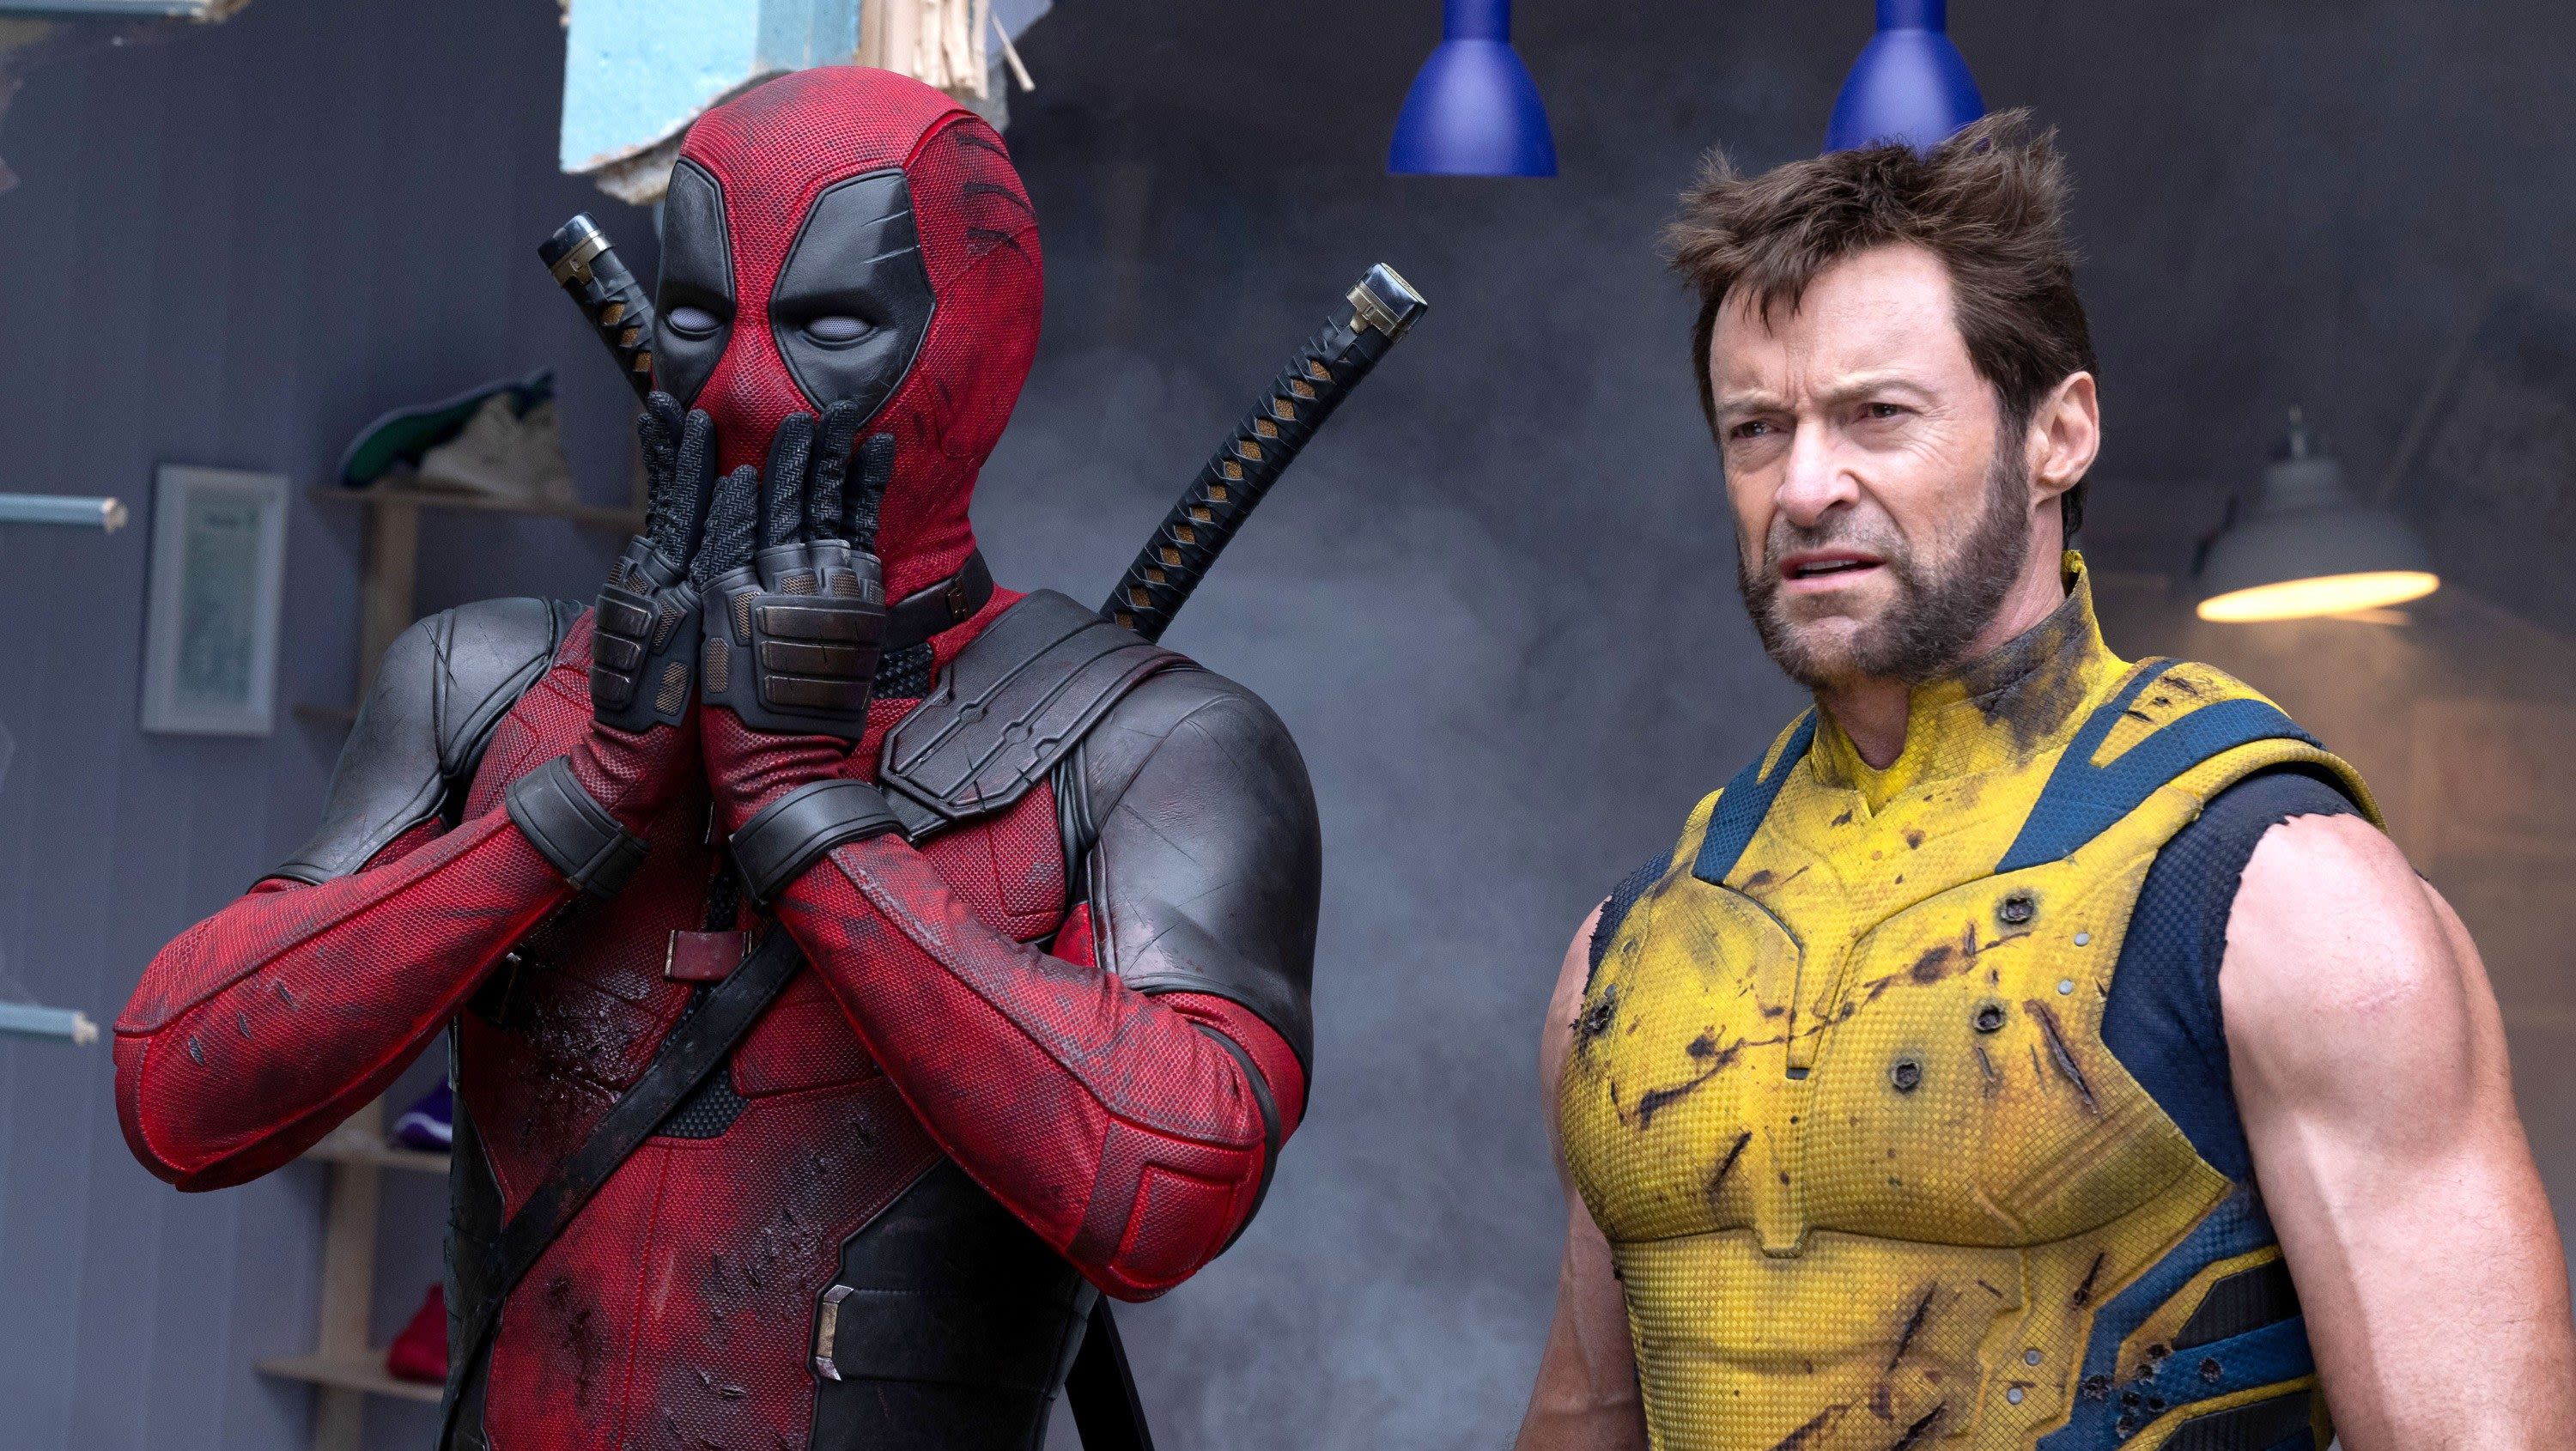 Theater Chains Feast On ‘Deadpool & Wolverine’ As Marvel’s Latest Drives Stocks, Wall Street Optimism